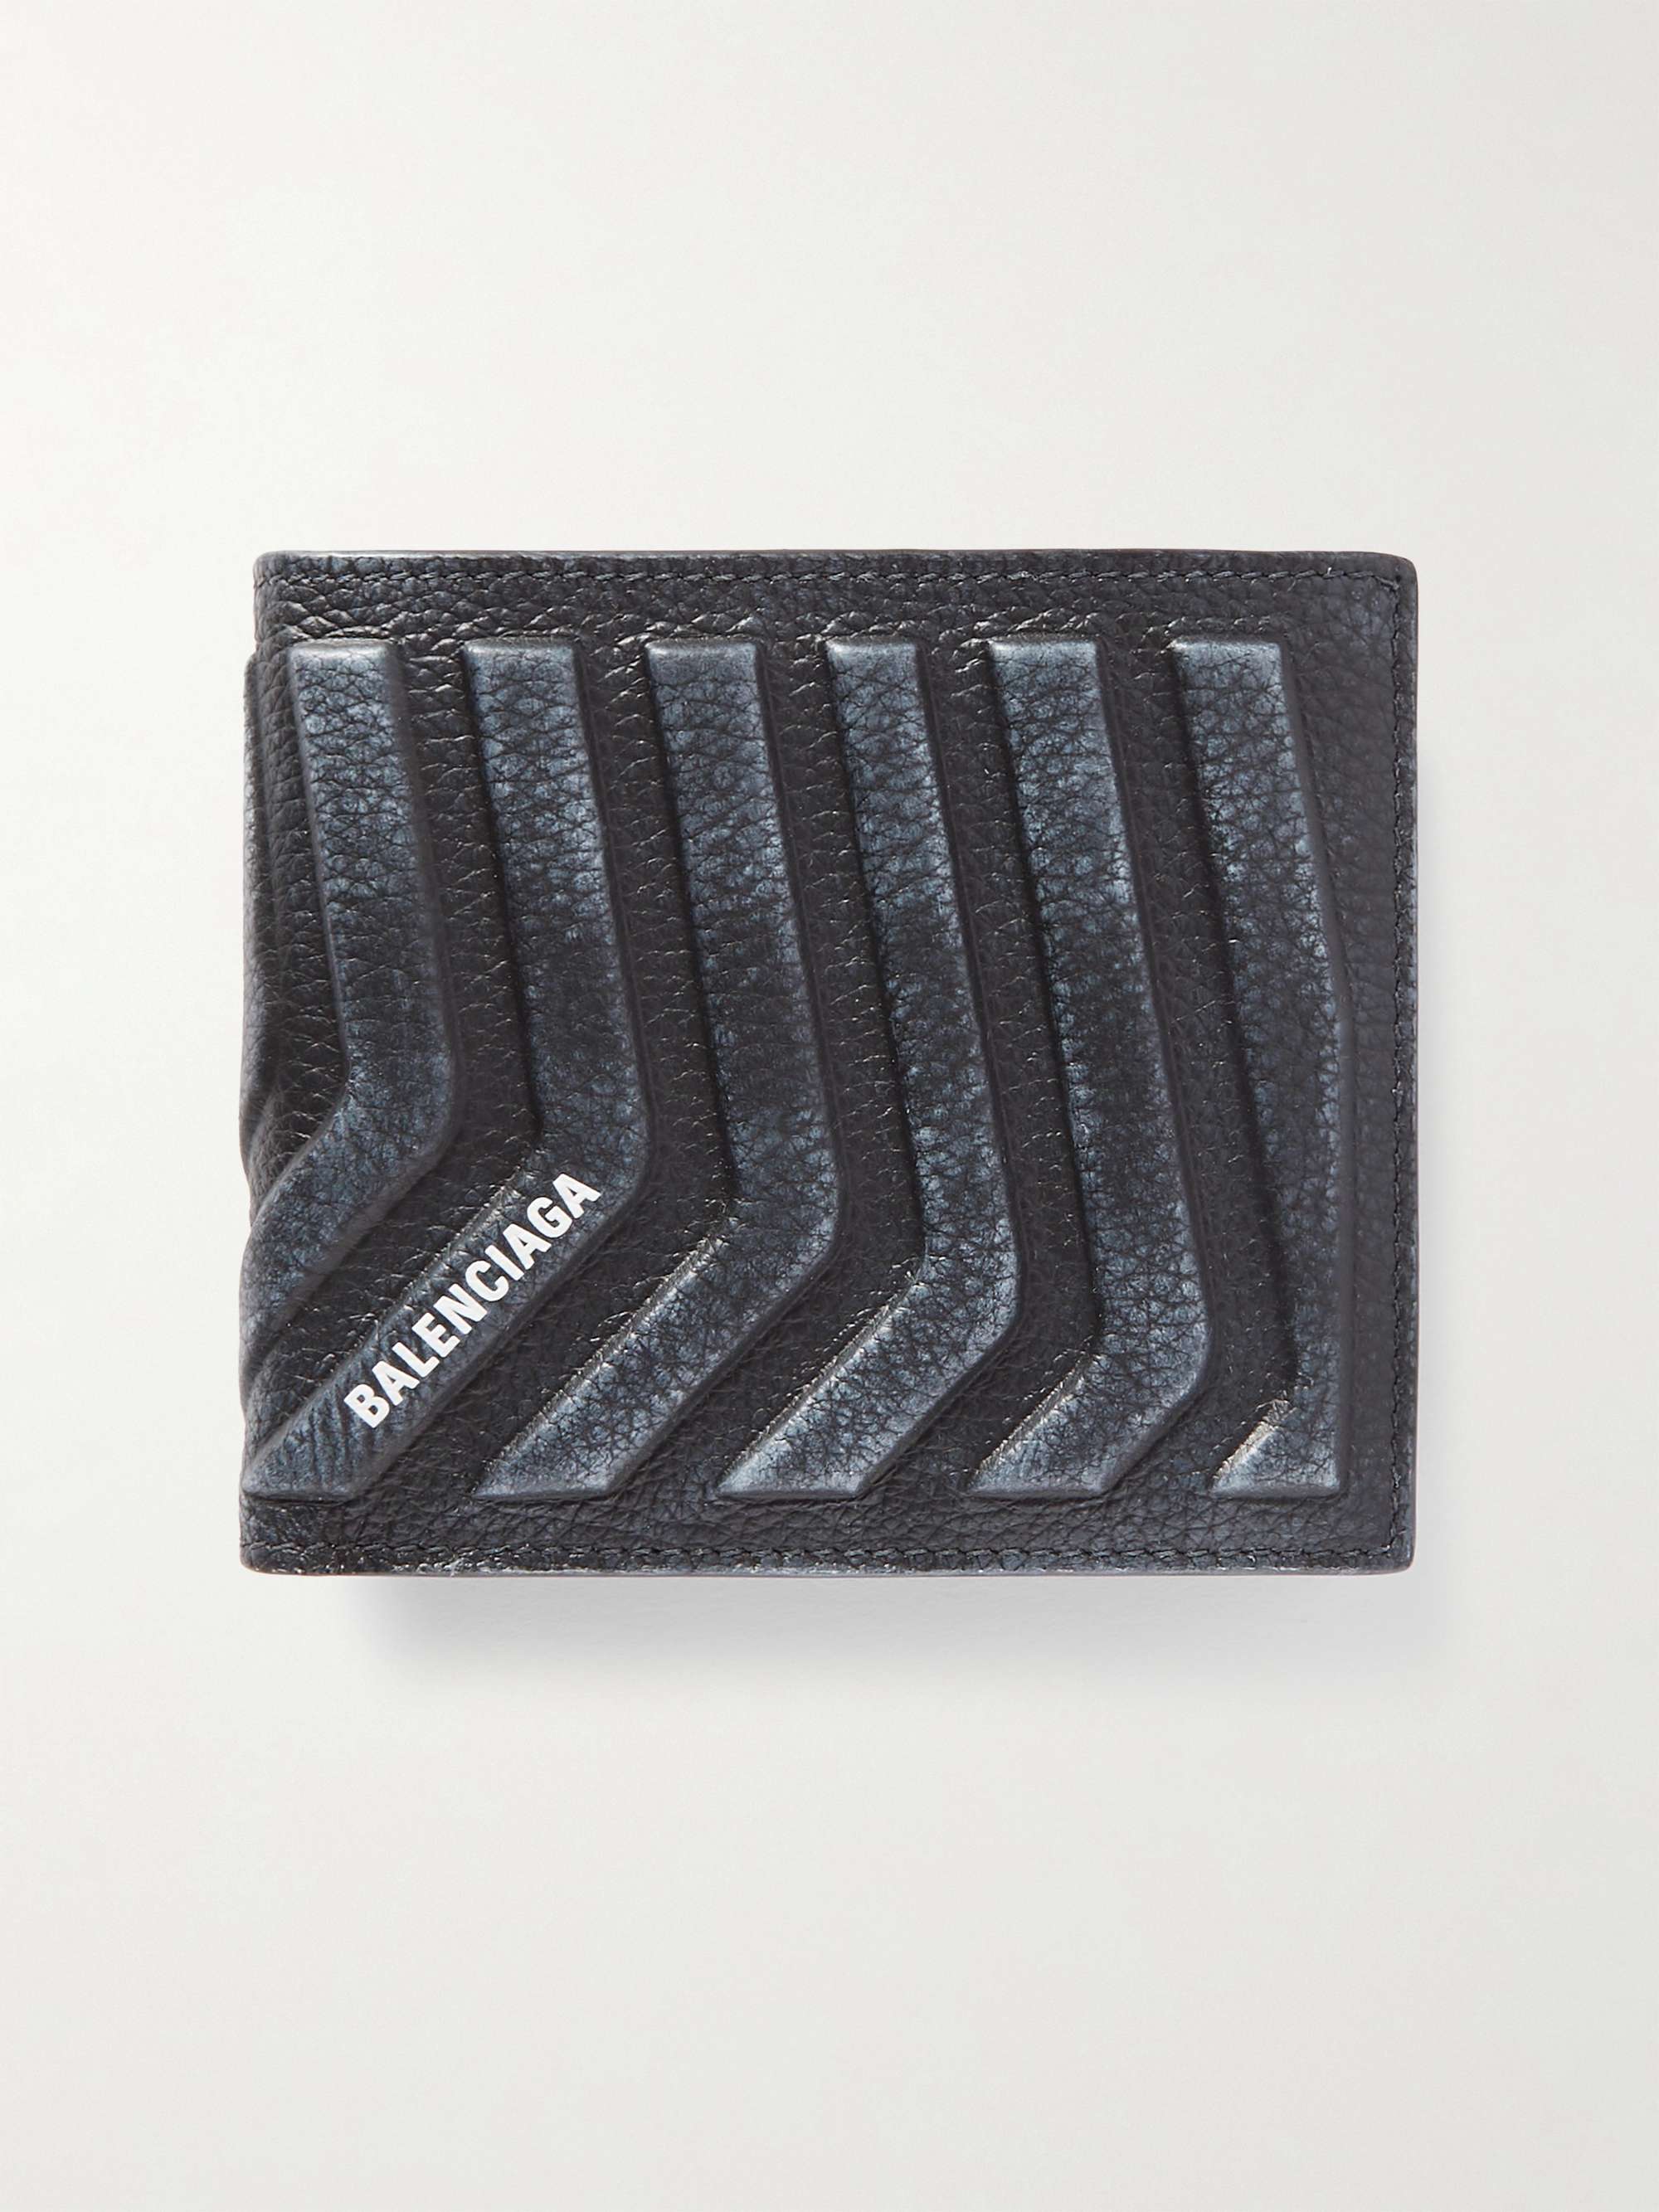 BALENCIAGA Logo-Print Full-Grain Leather Billfold Wallet | MR PORTER